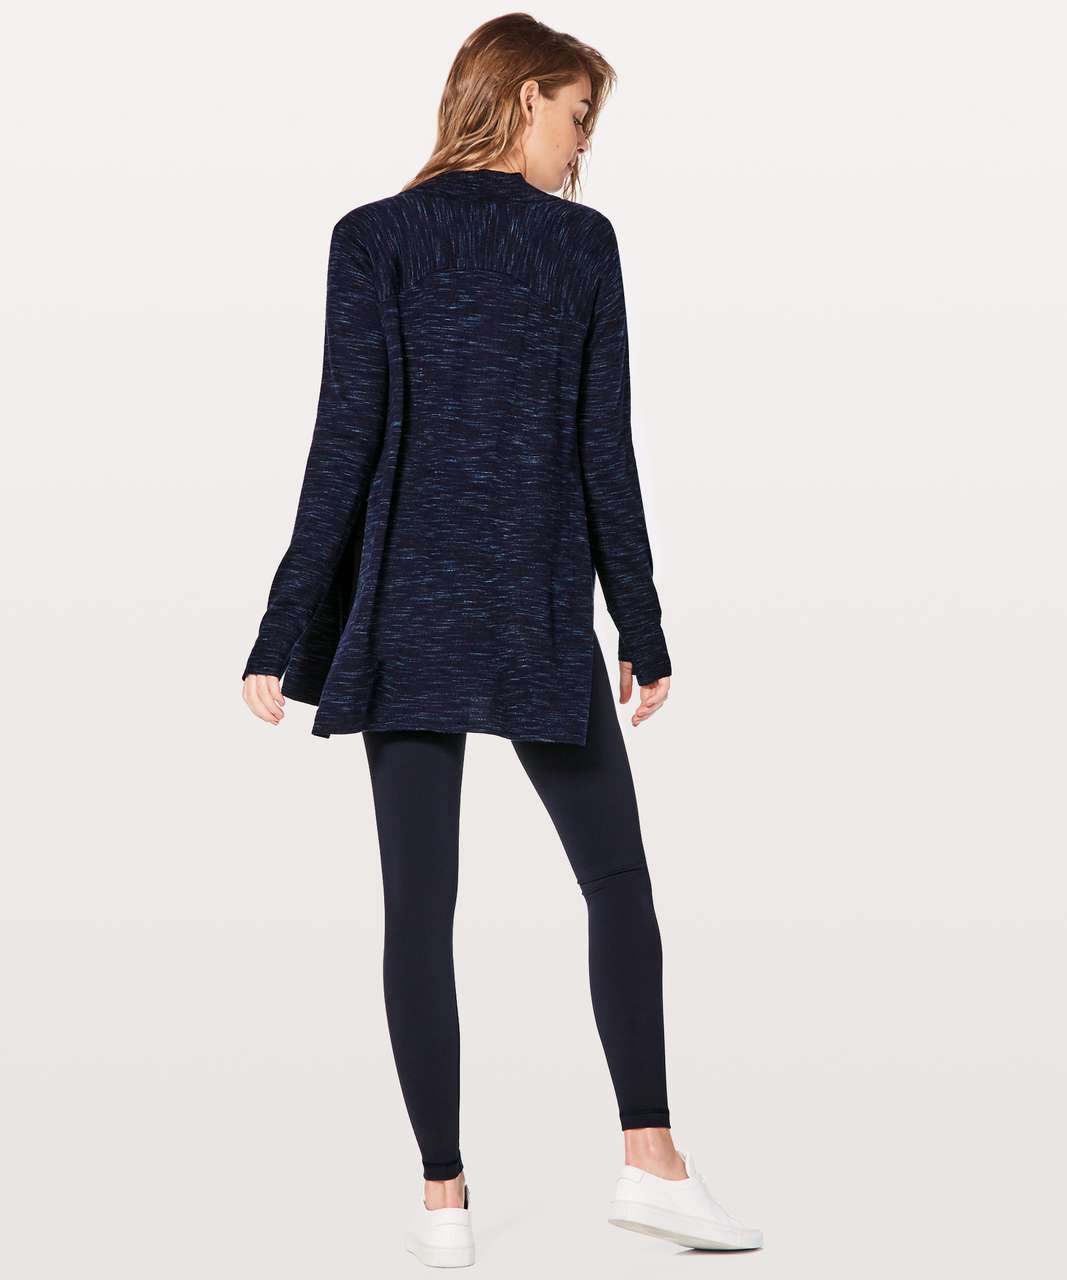  lululemon Well Being Sweater - MDNI (Size 6) Blue